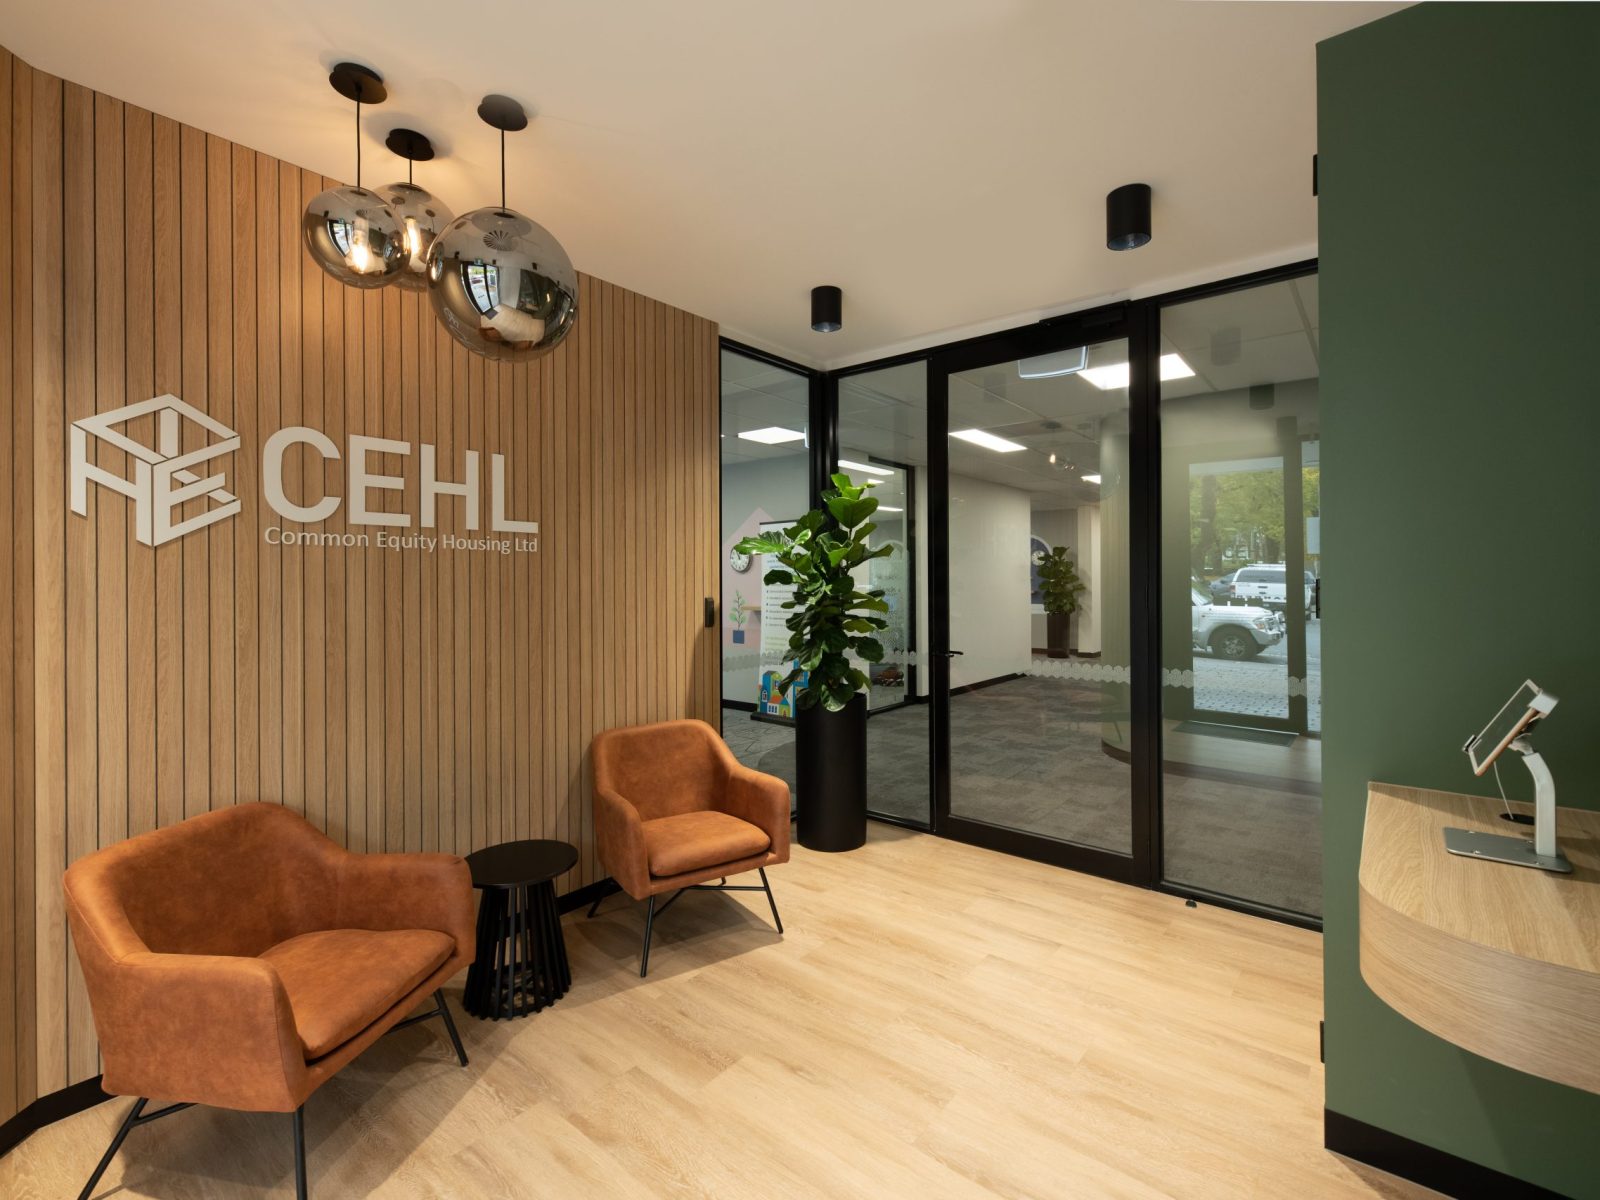 CEHL Office Reception